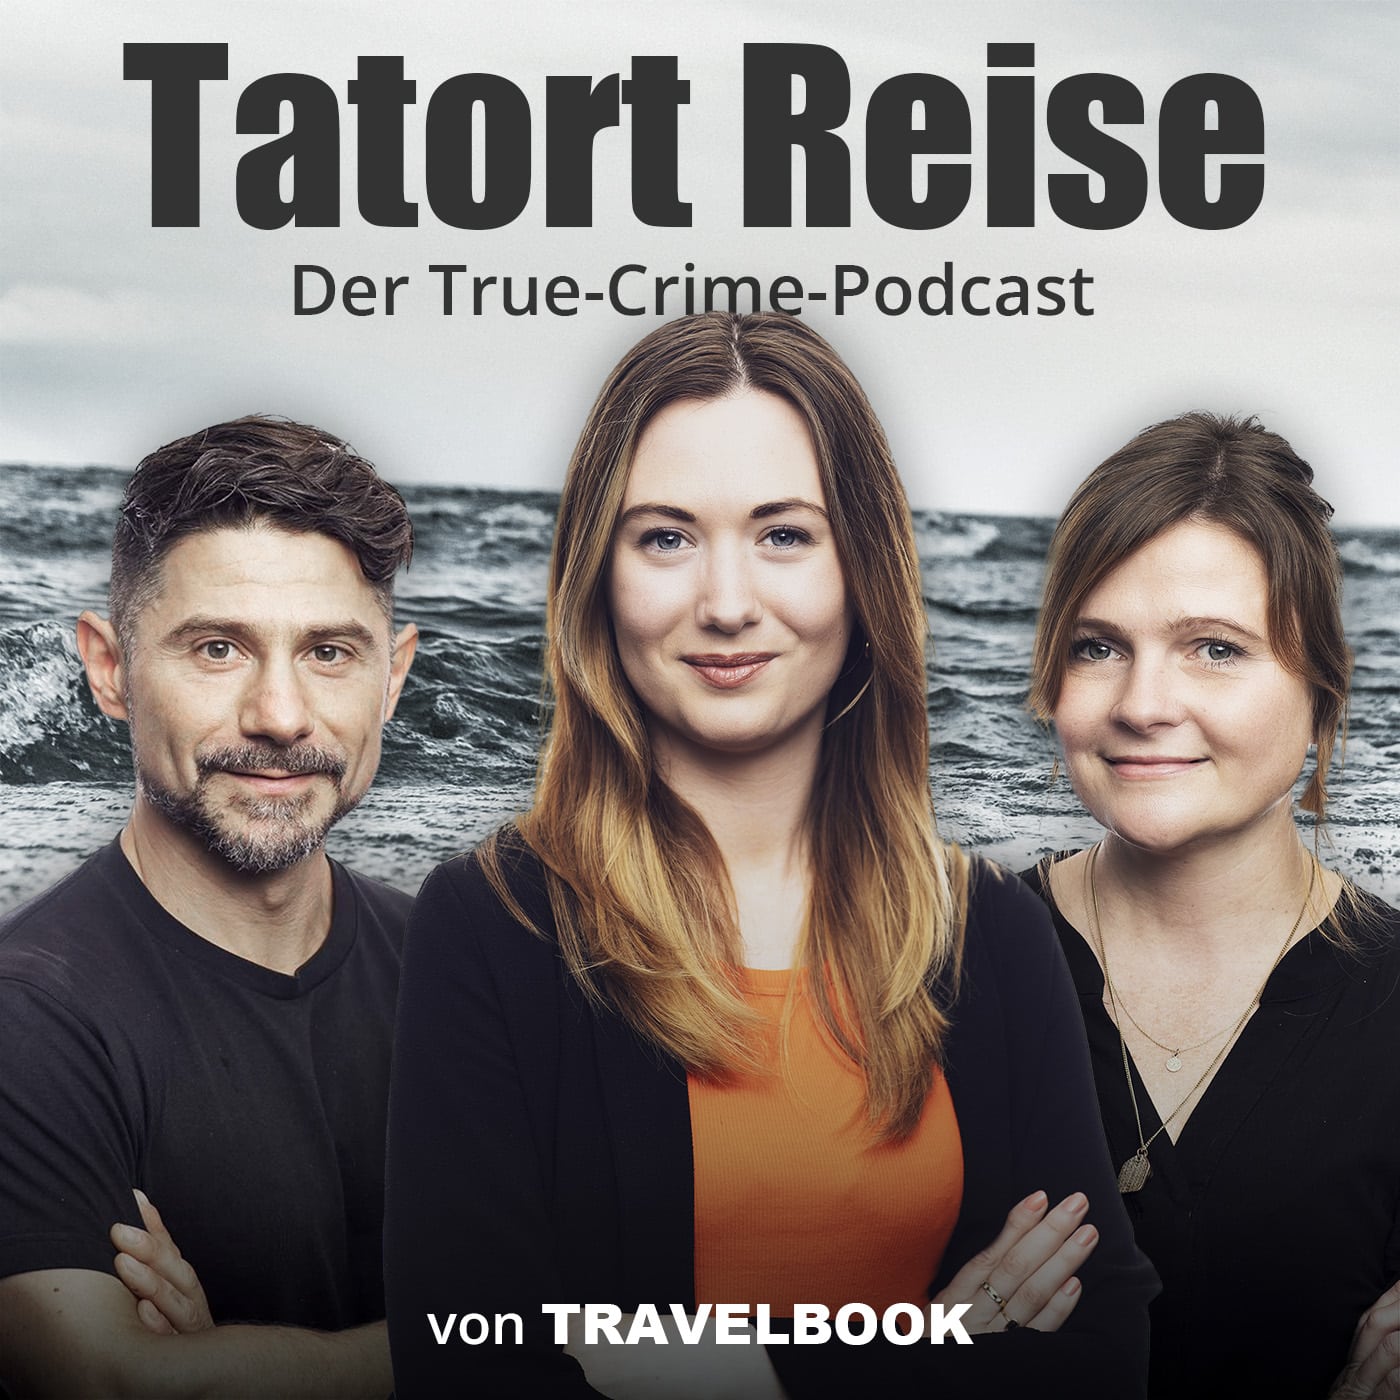 Truce Crime Podcast Tatort Reise von Travelbook